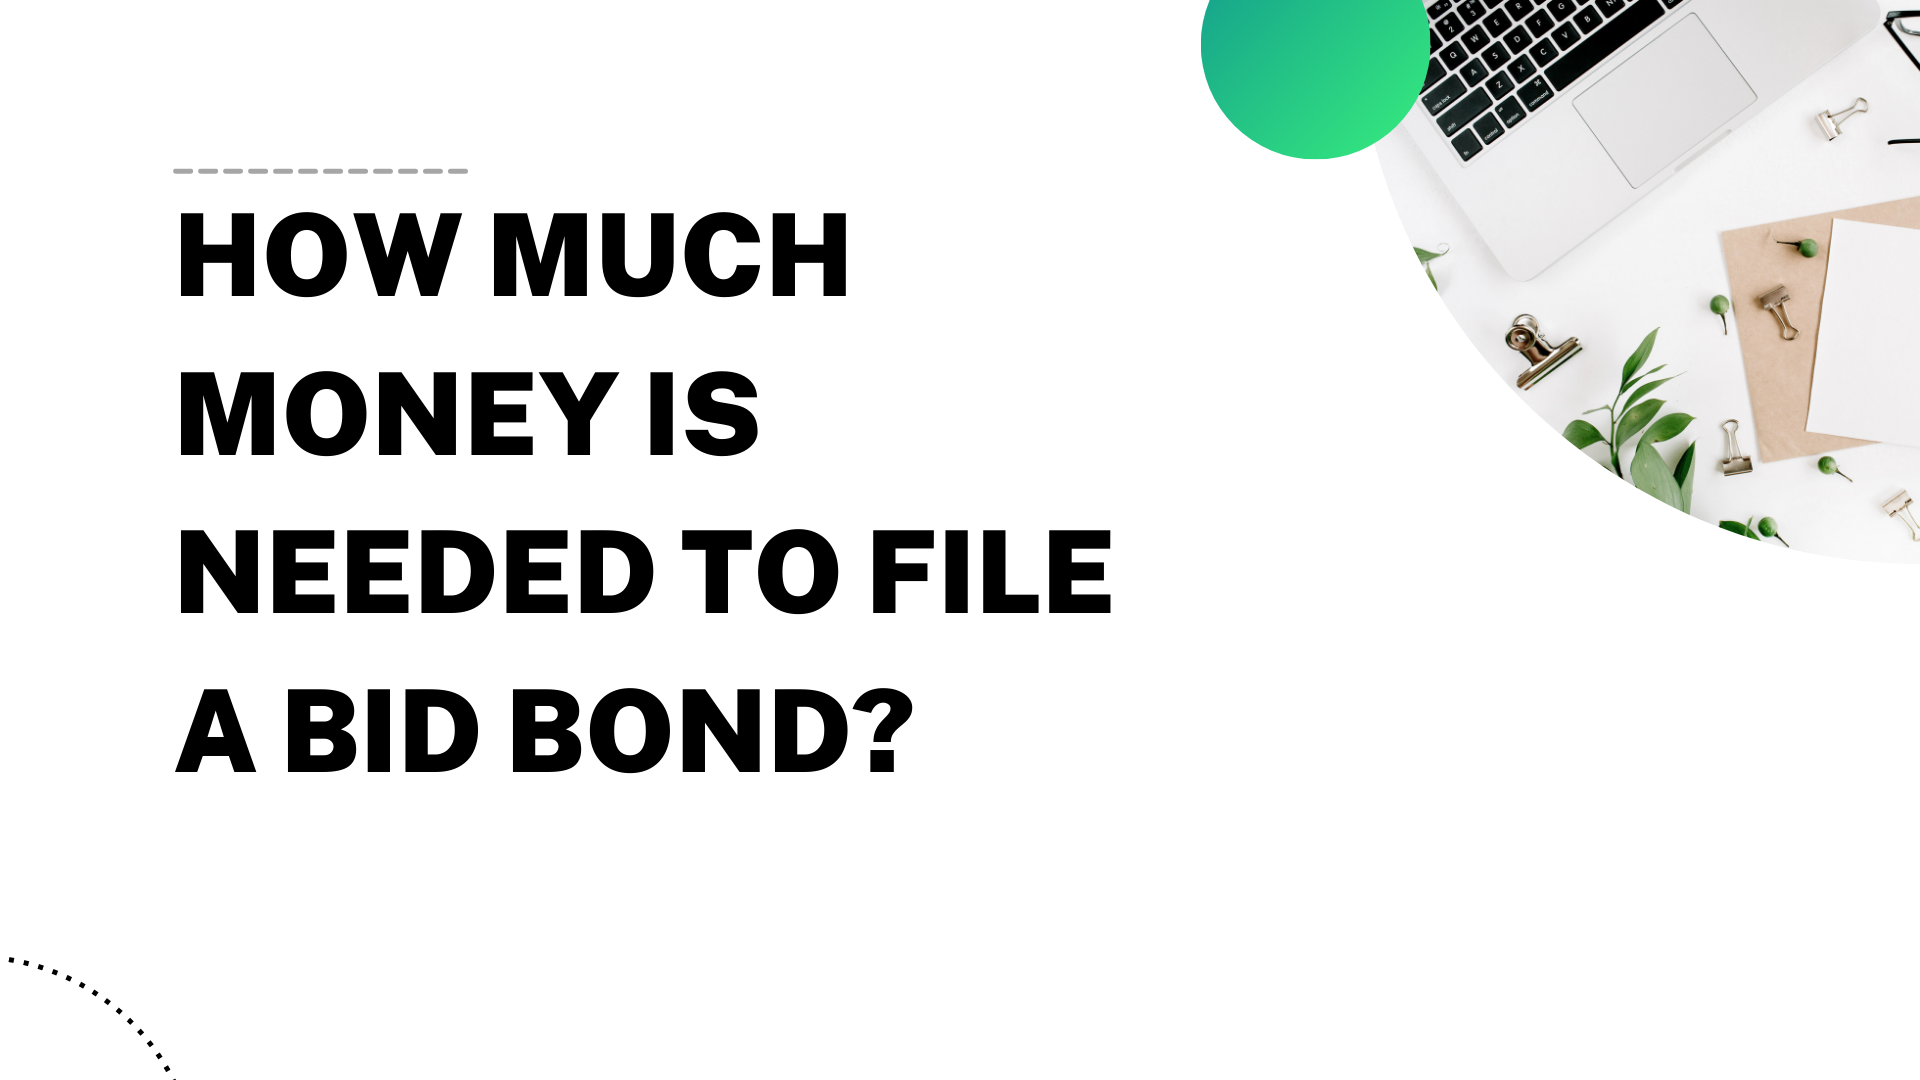 bid bond - How to get a bid bond - work space